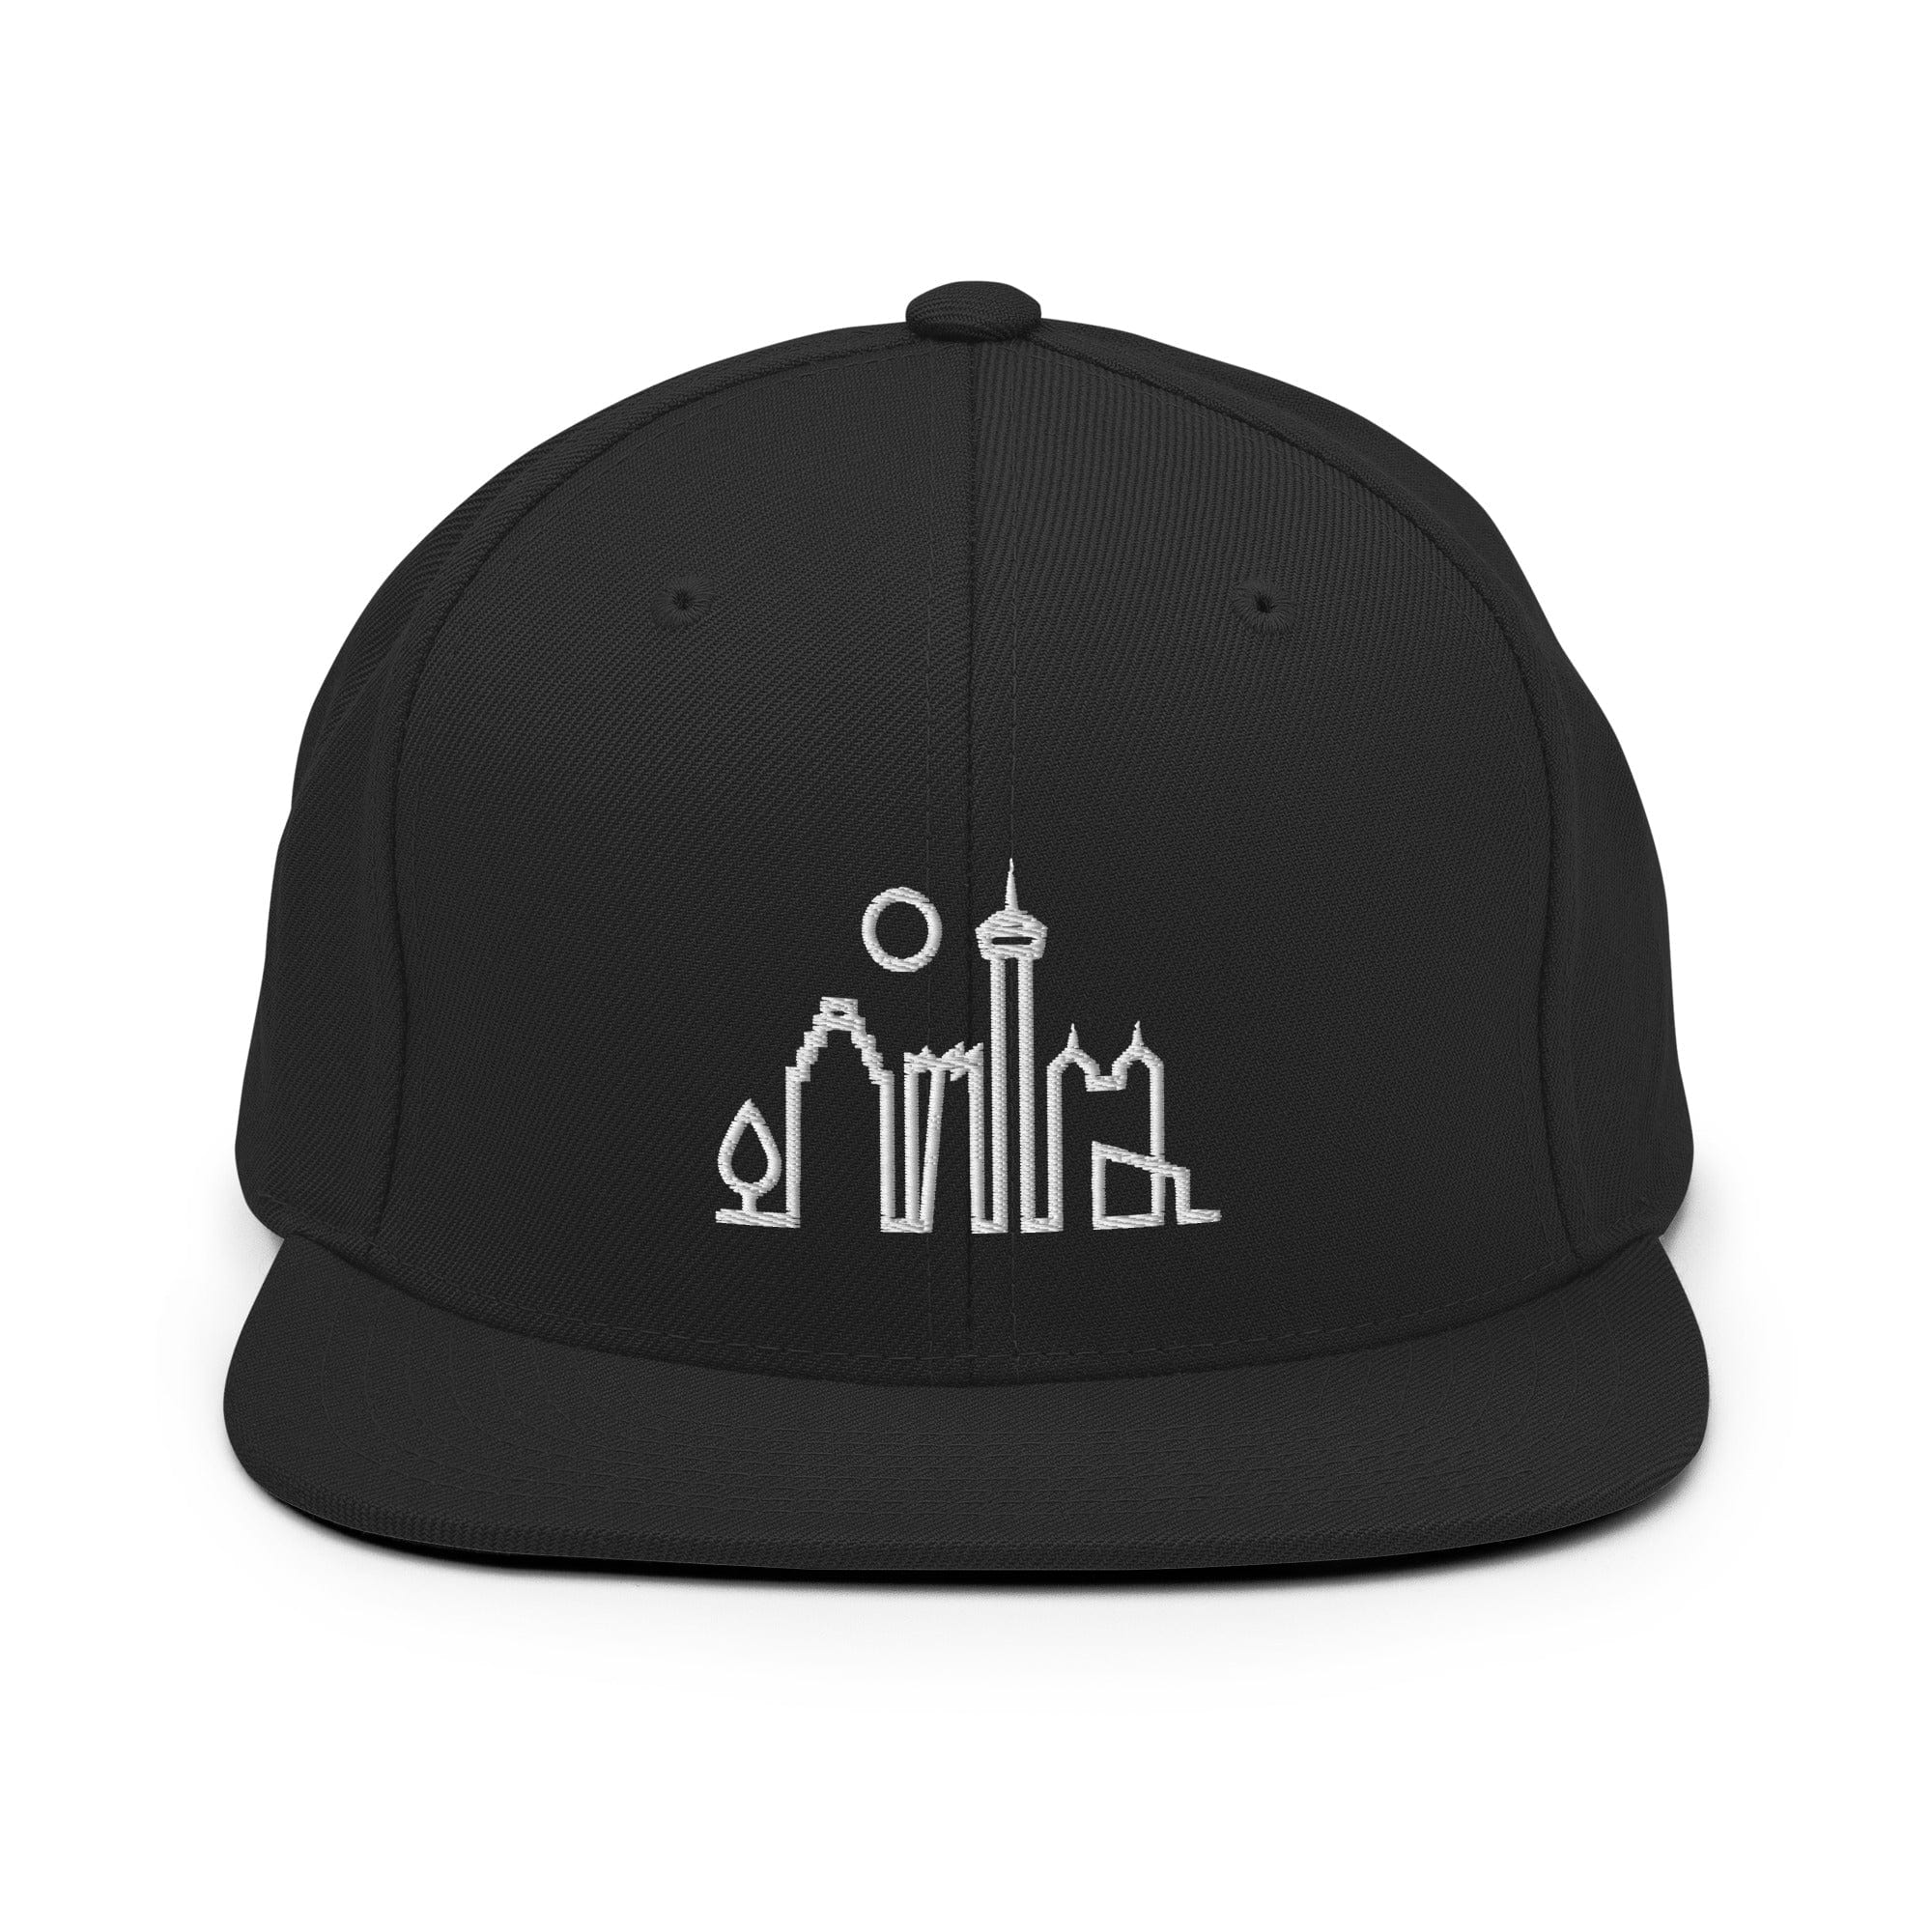 City Shirt Co San Antonio Urban Dweller Snapback Hat Black